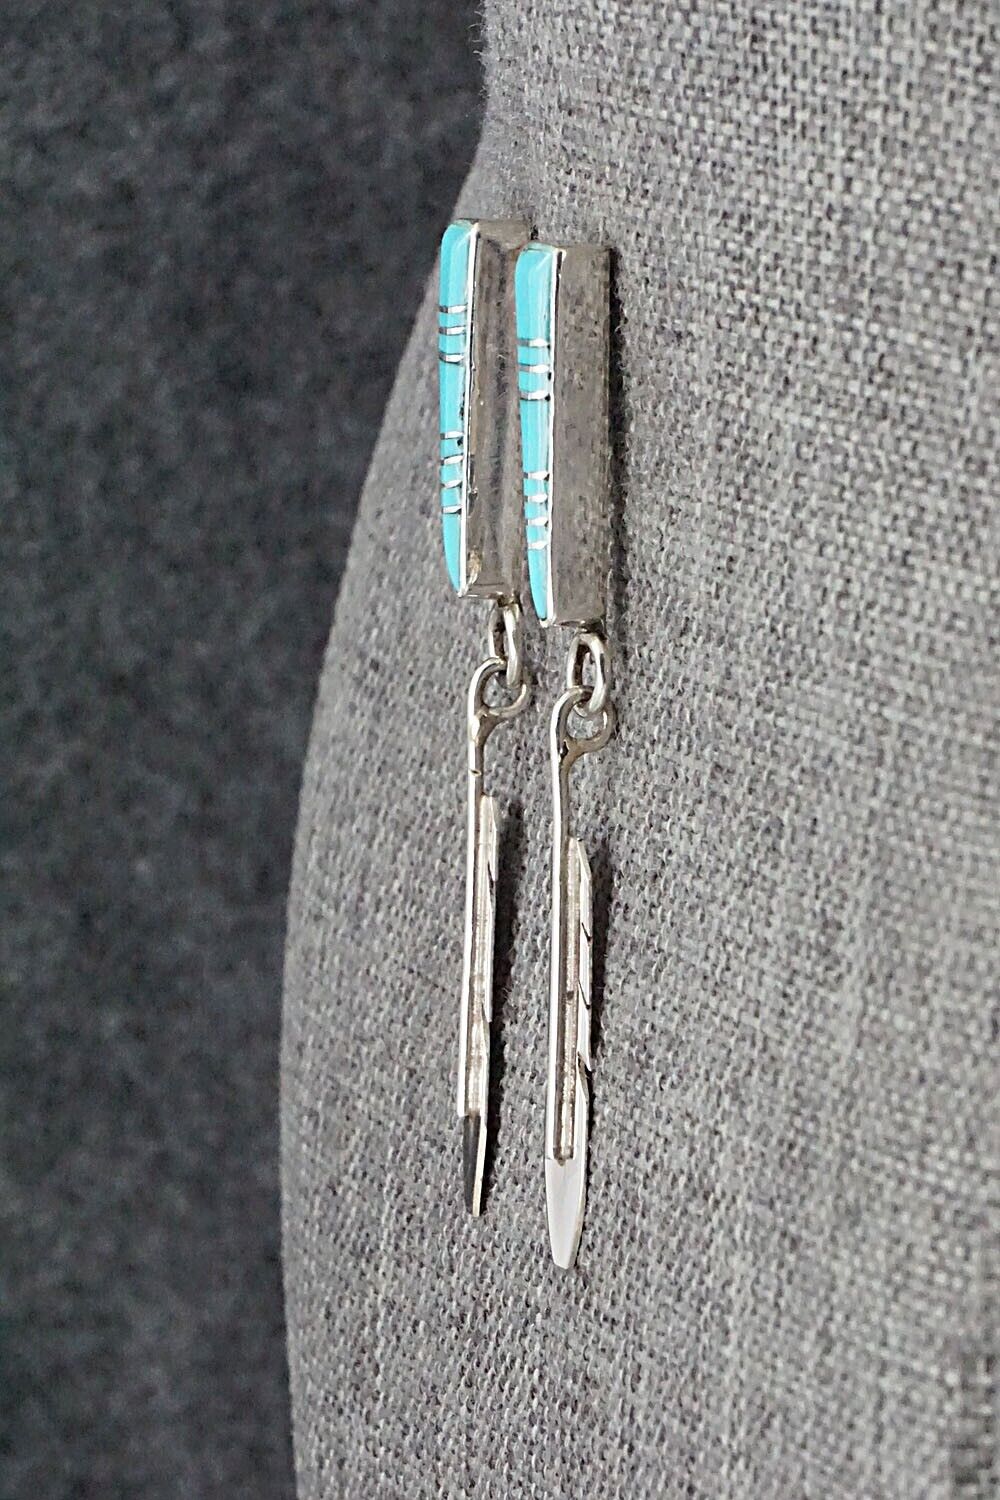 Turquoise & Sterling Silver Earrings - Terrance Panteah & Tammy Johnson